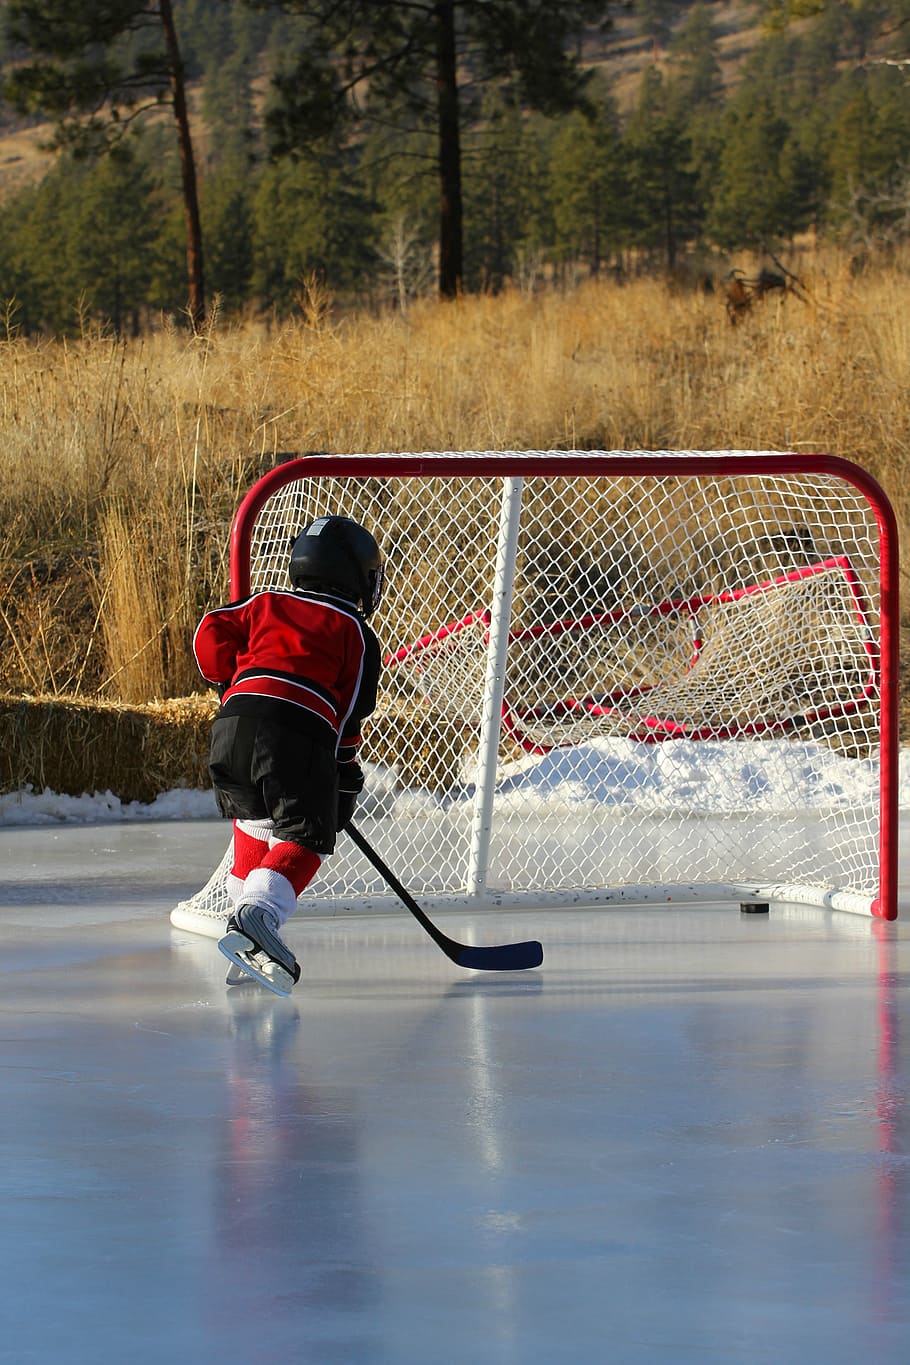 kid playing hockey, outdoor rink, net, goal, hockey stick, ice hockey